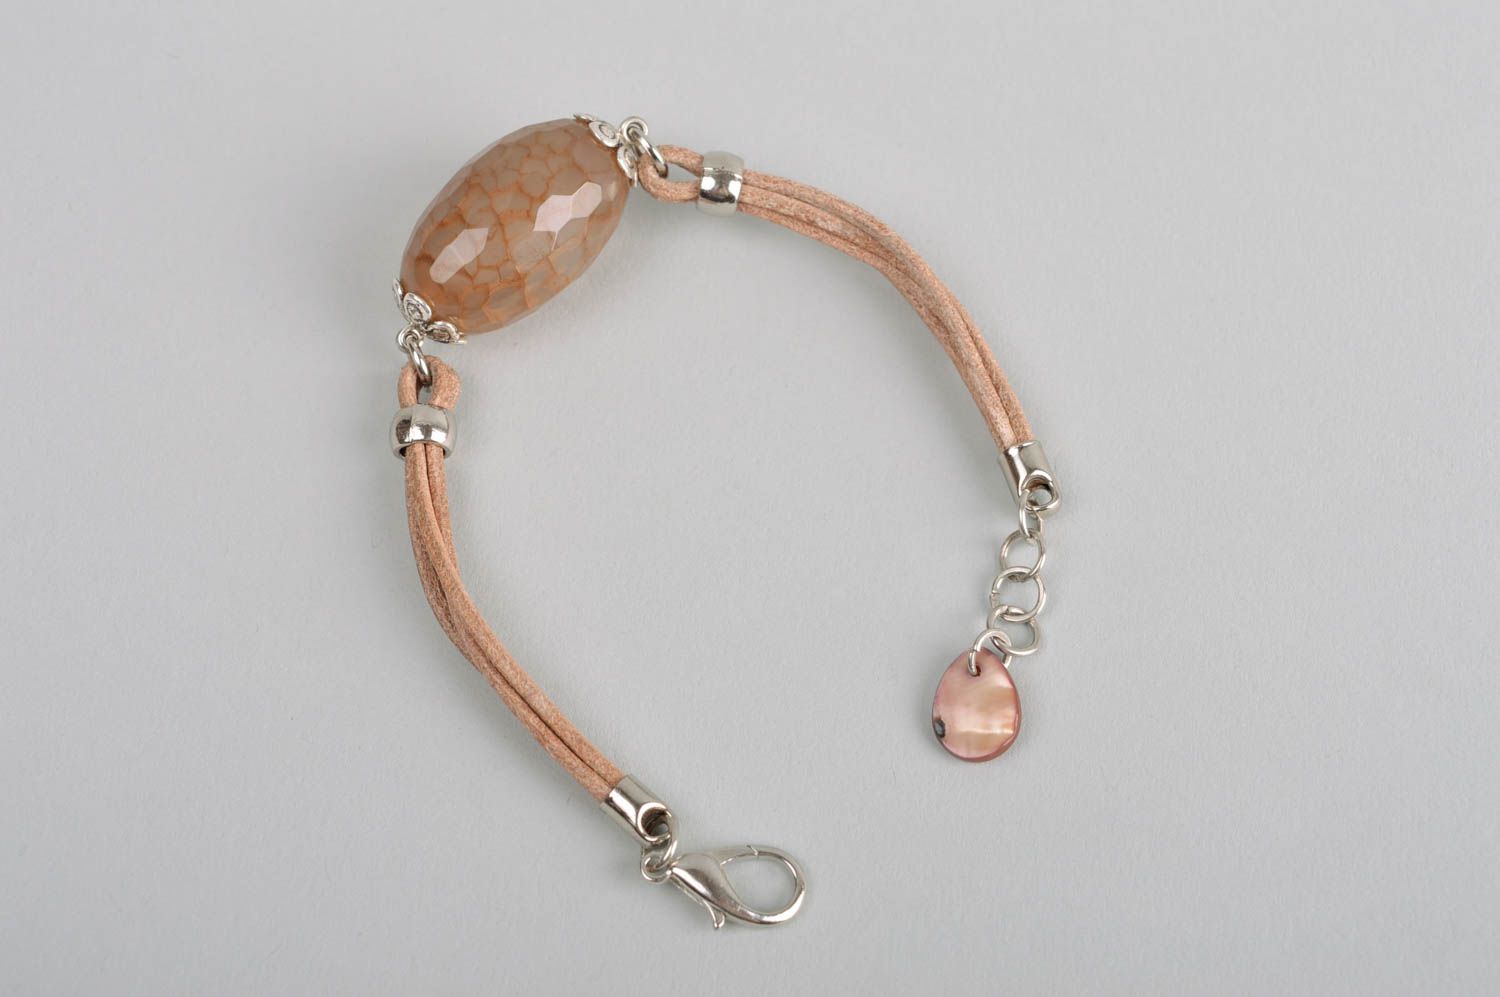 Handmade gemstone bracelet leather bracelet designs accessories for girls photo 5